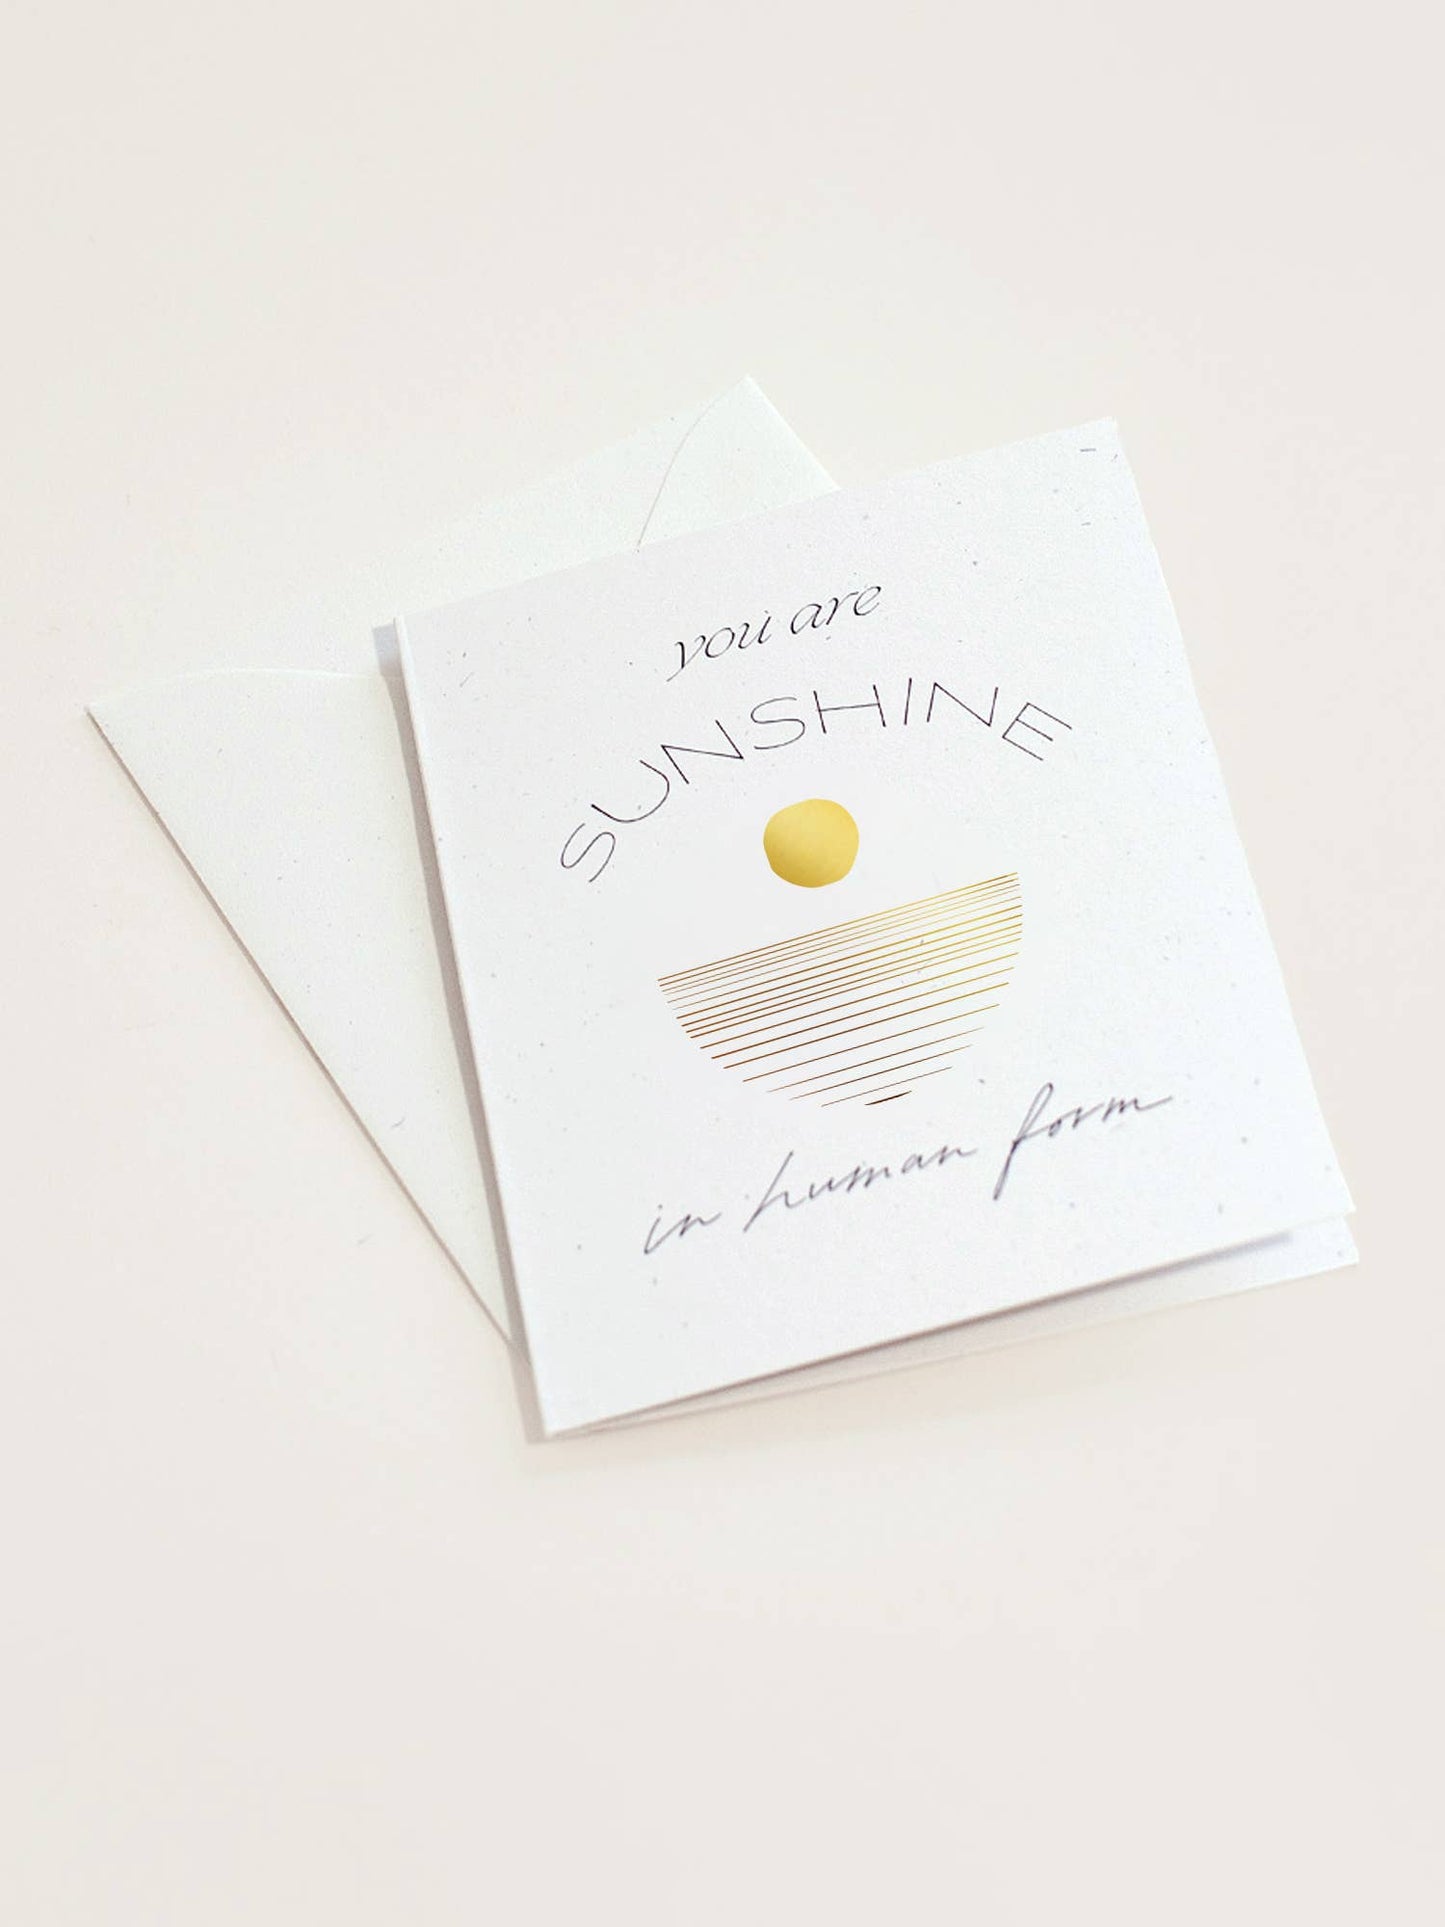 You Are Sunshine Card